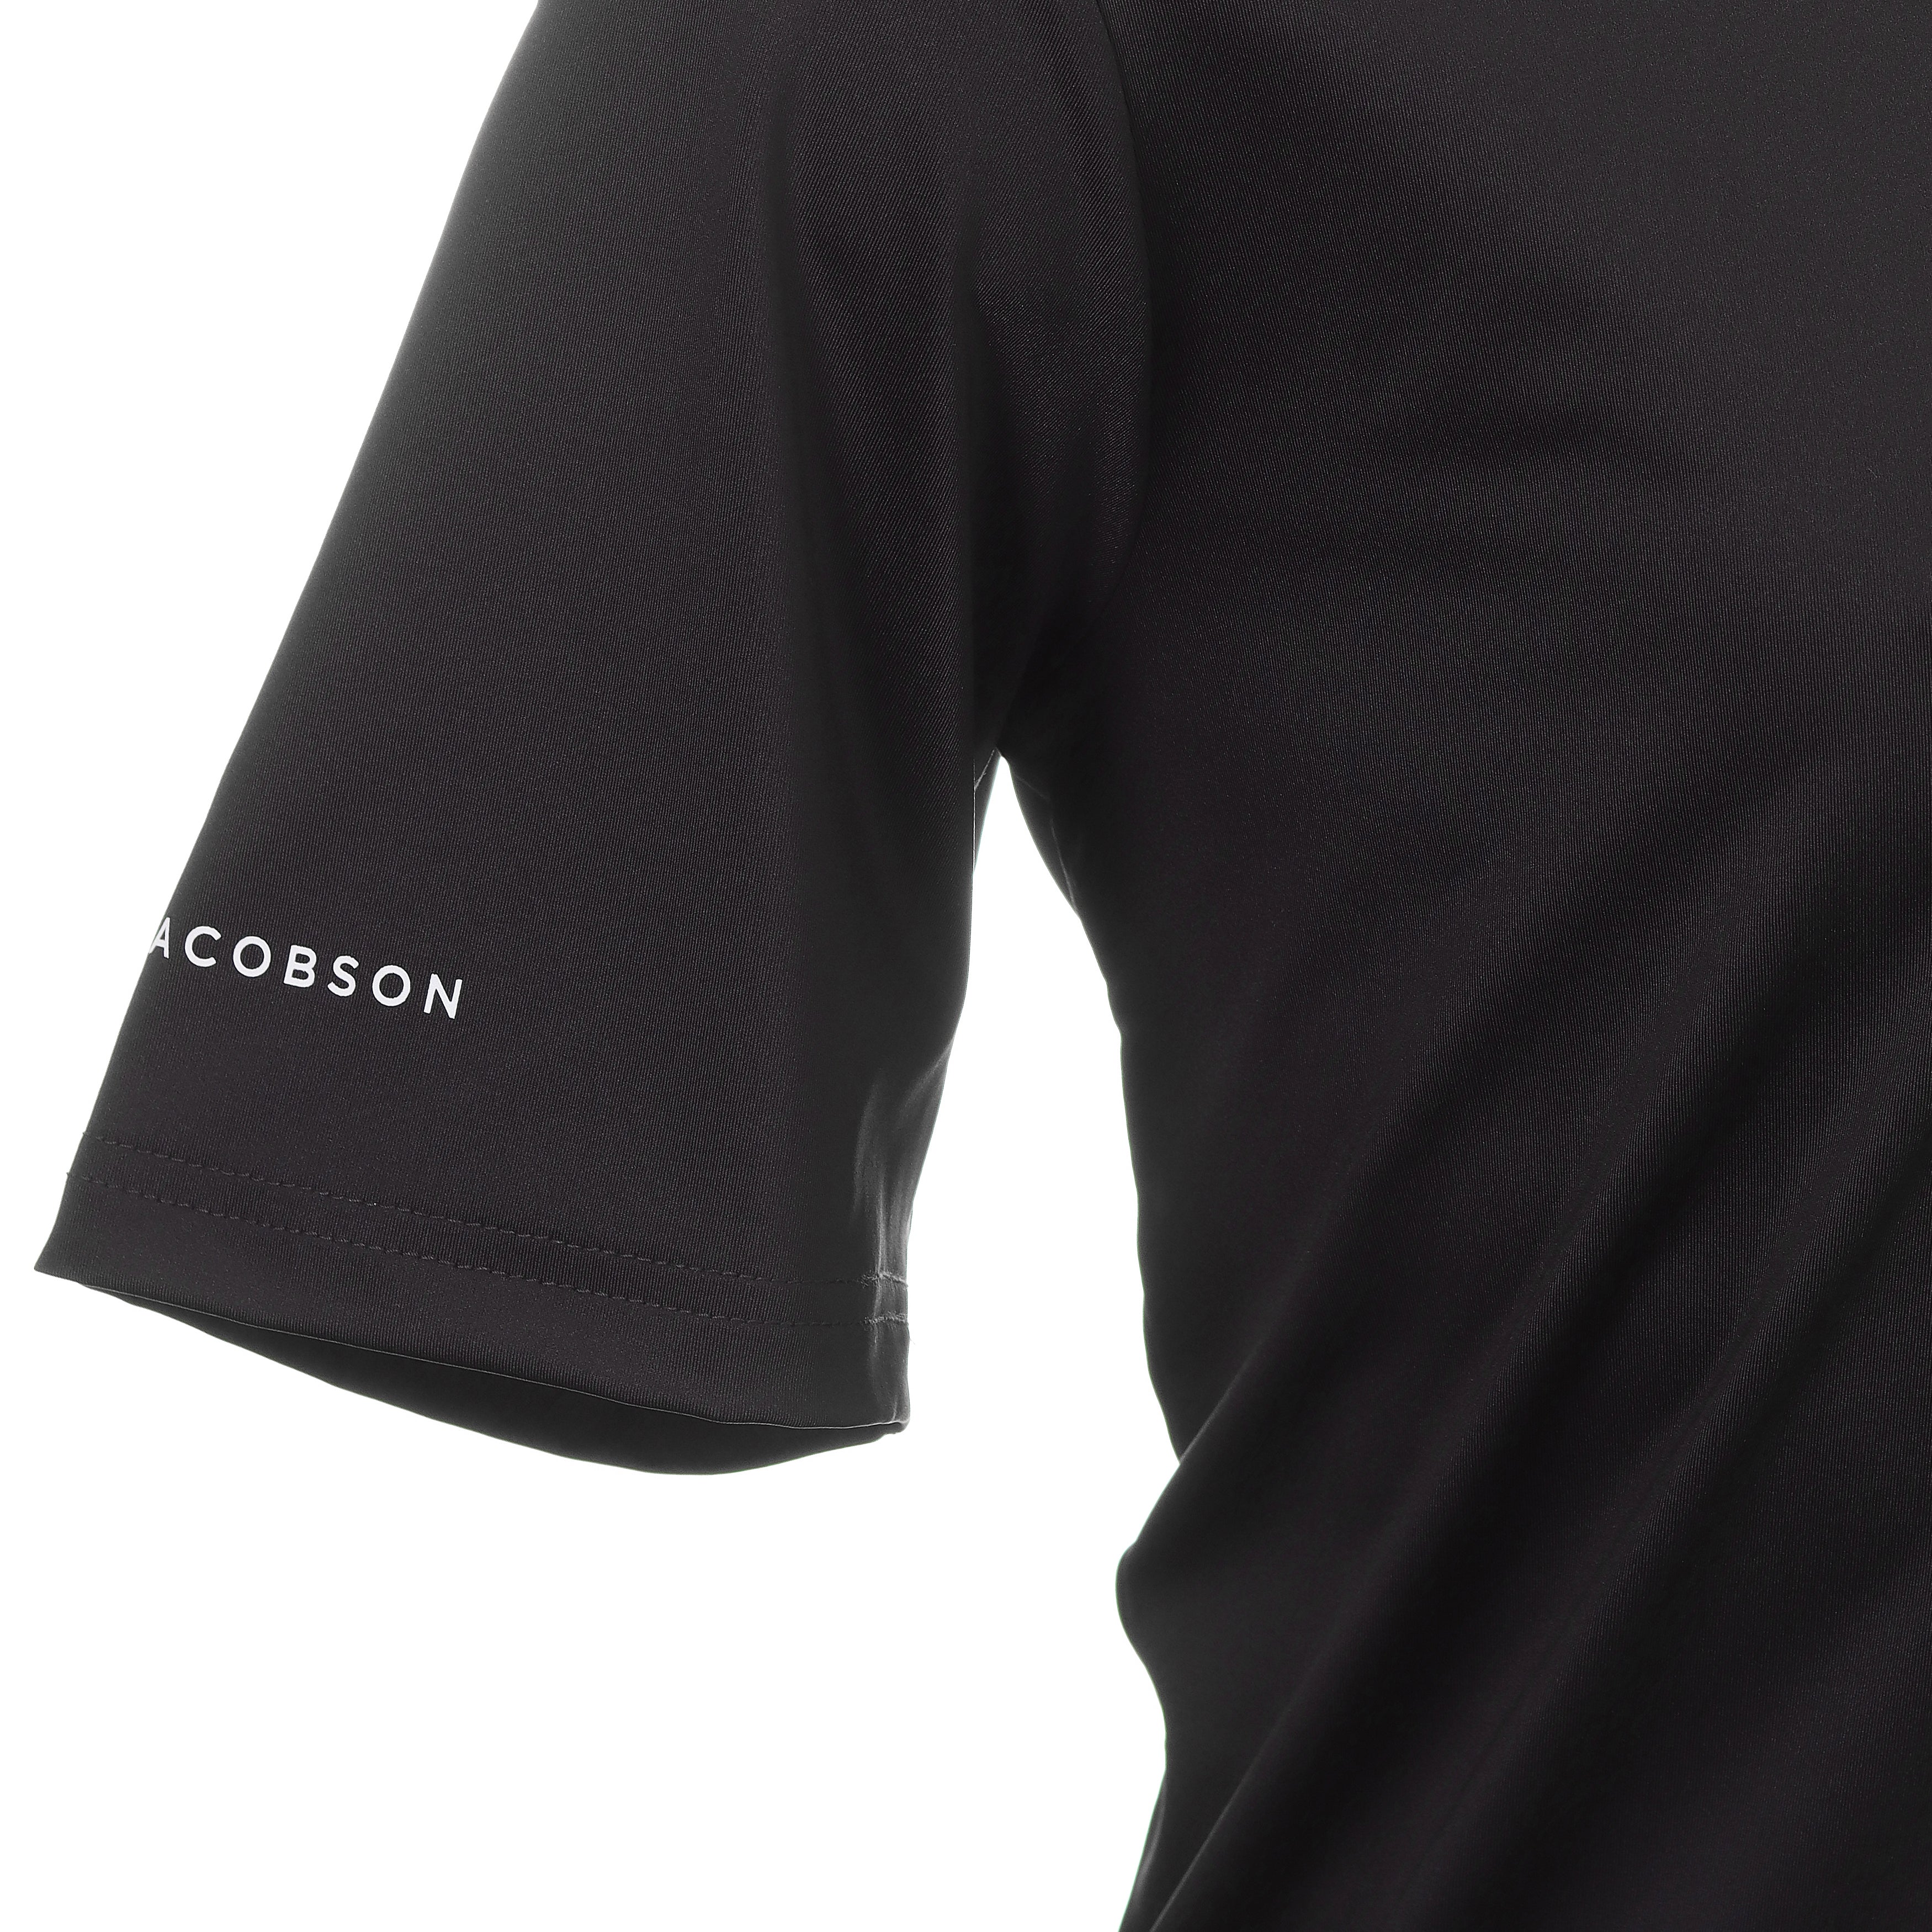 Oscar Jacobson Chap II Tour Shirt OJTS0041 Black Lunar Grey ...